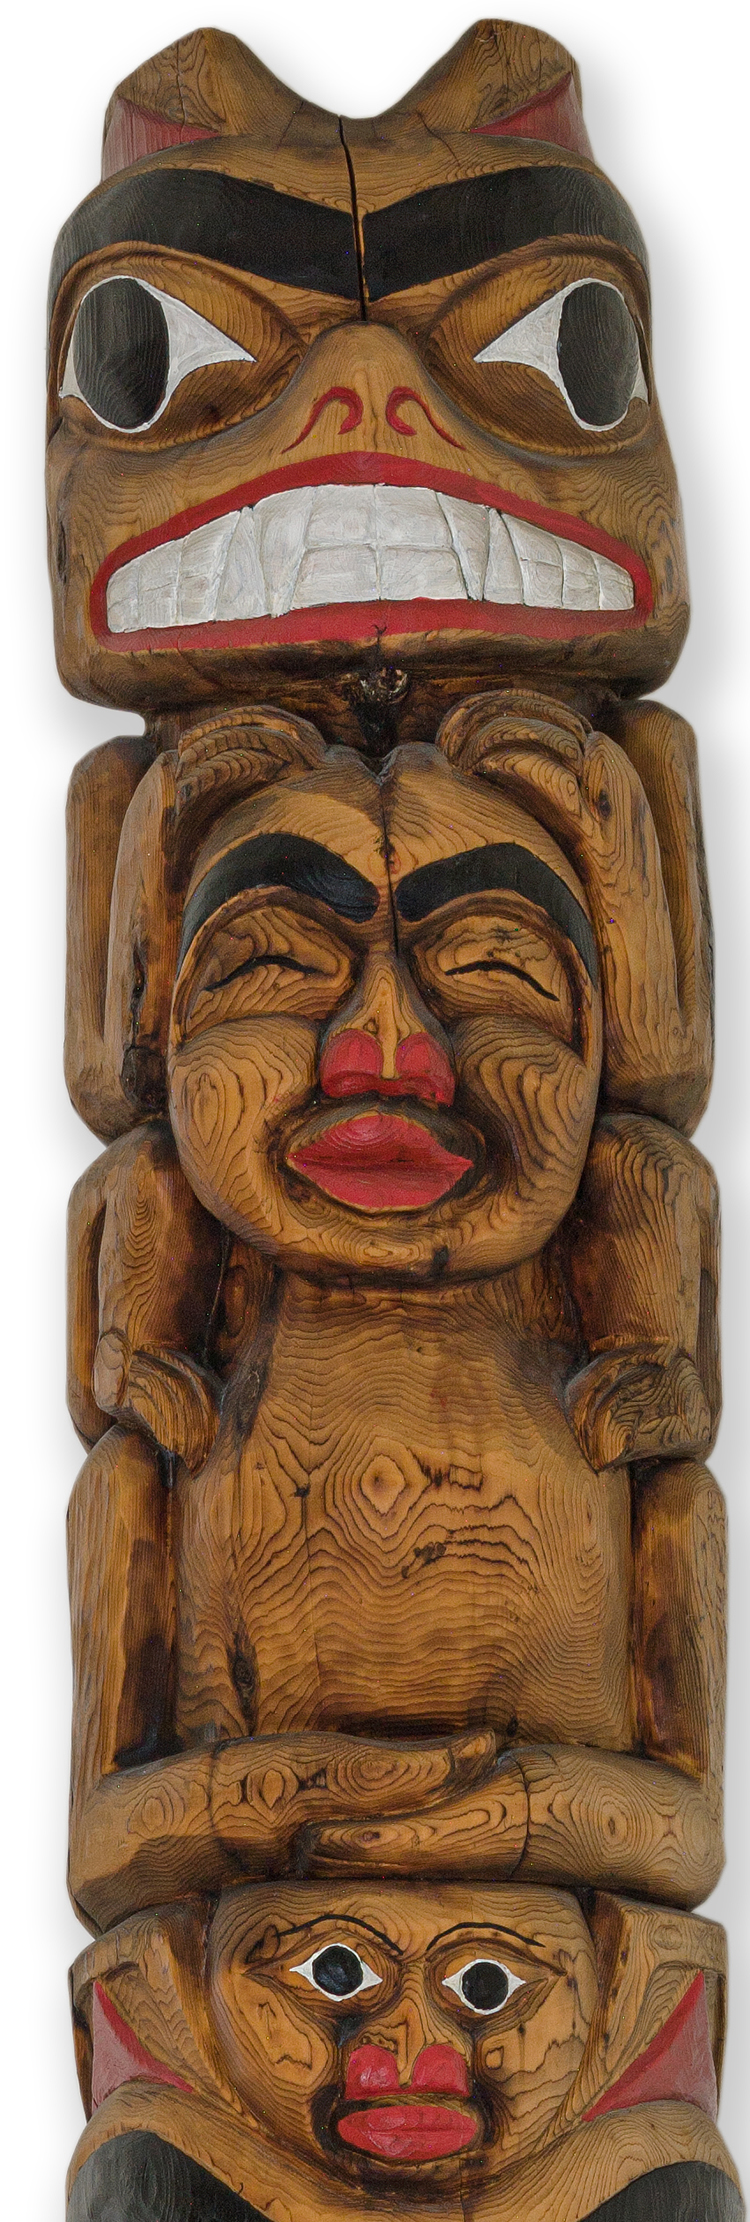 Pacific Northwest Coast Style Totem par Bill Bouchard